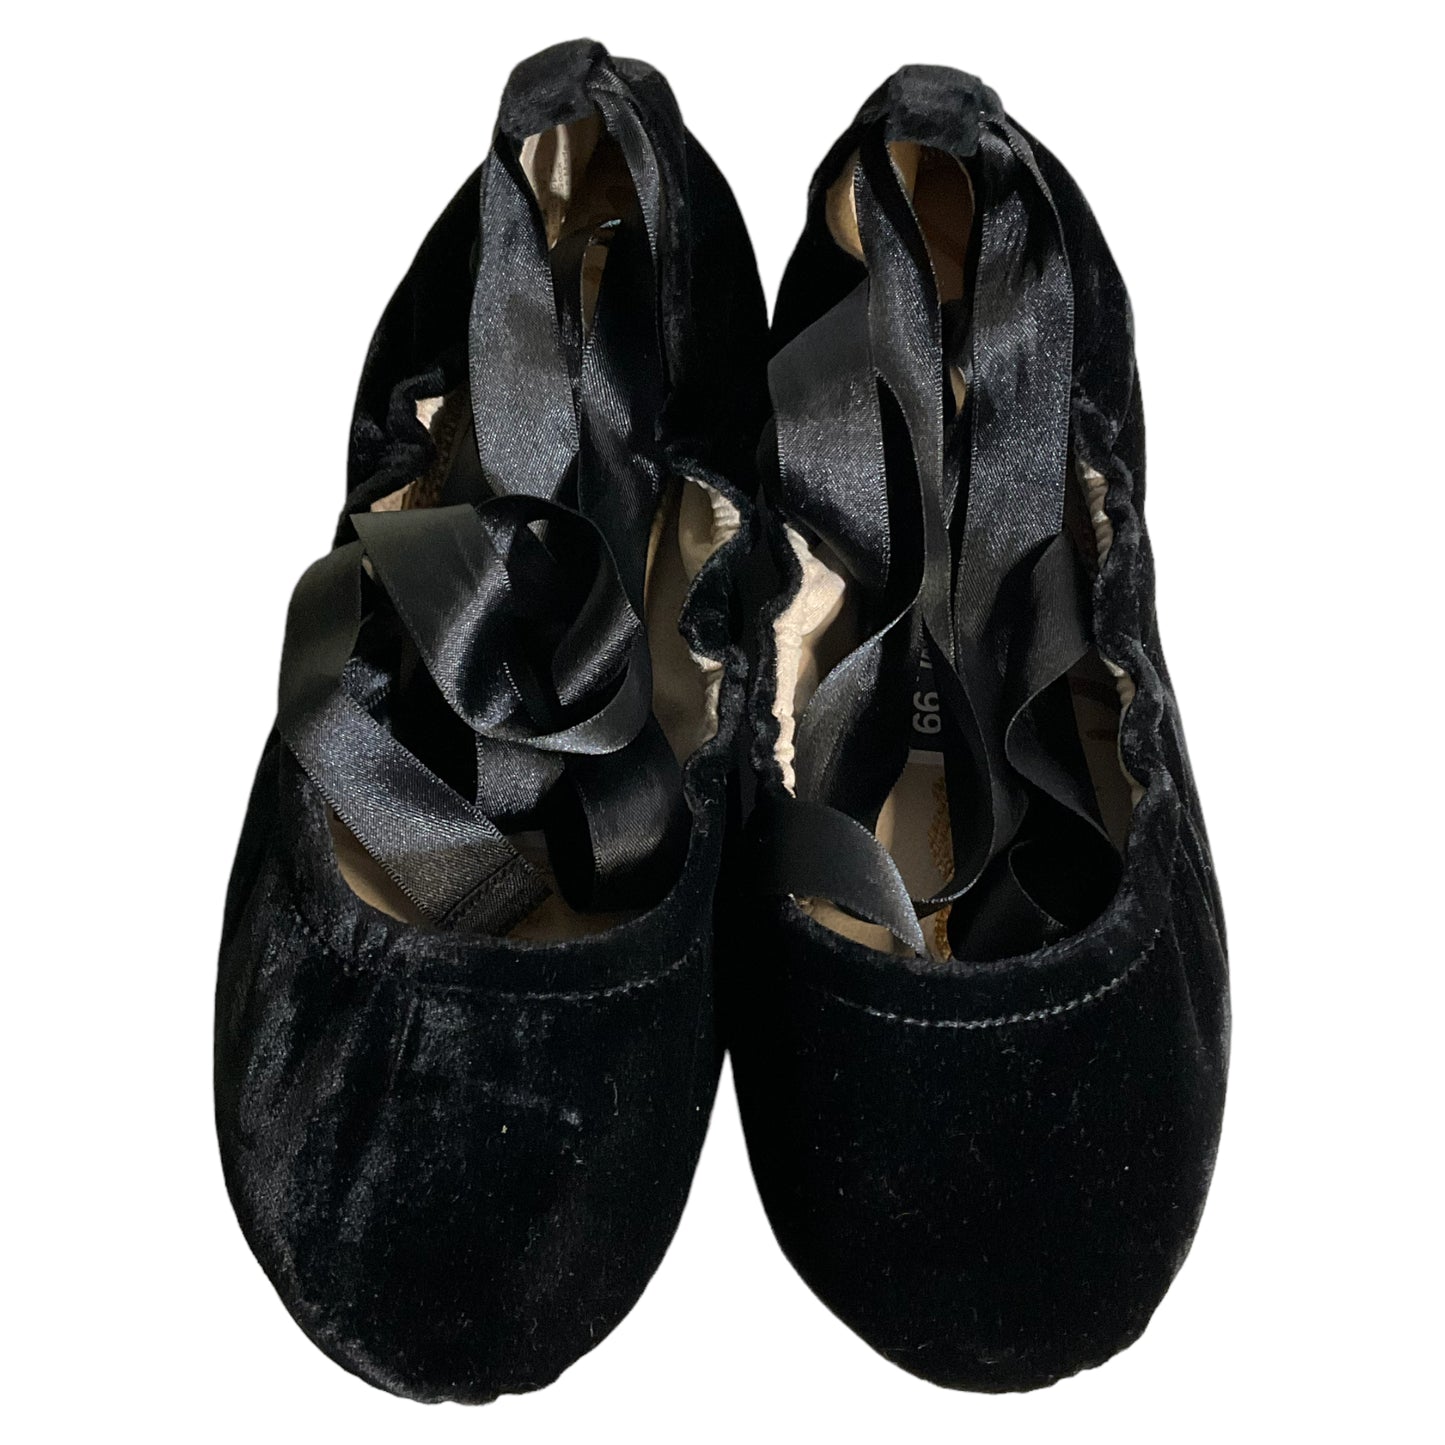 Shoes Flats Ballet By Sam Edelman  Size: 9.5